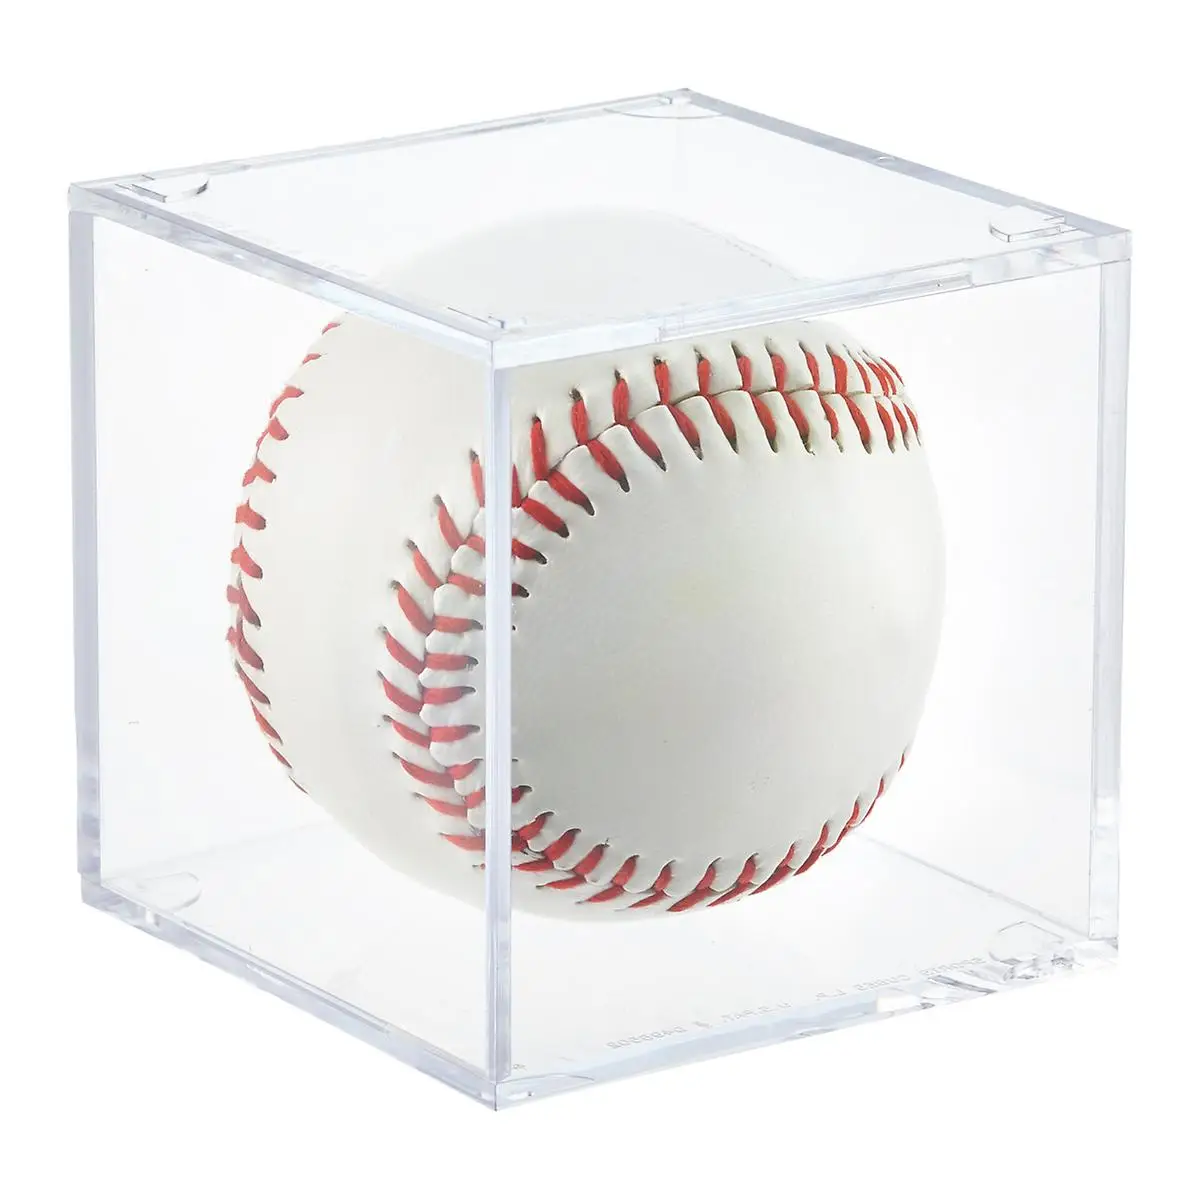 1X Acrylic Baseball Display Case Tennis Ball Care Cube Box Holder UV Protection 